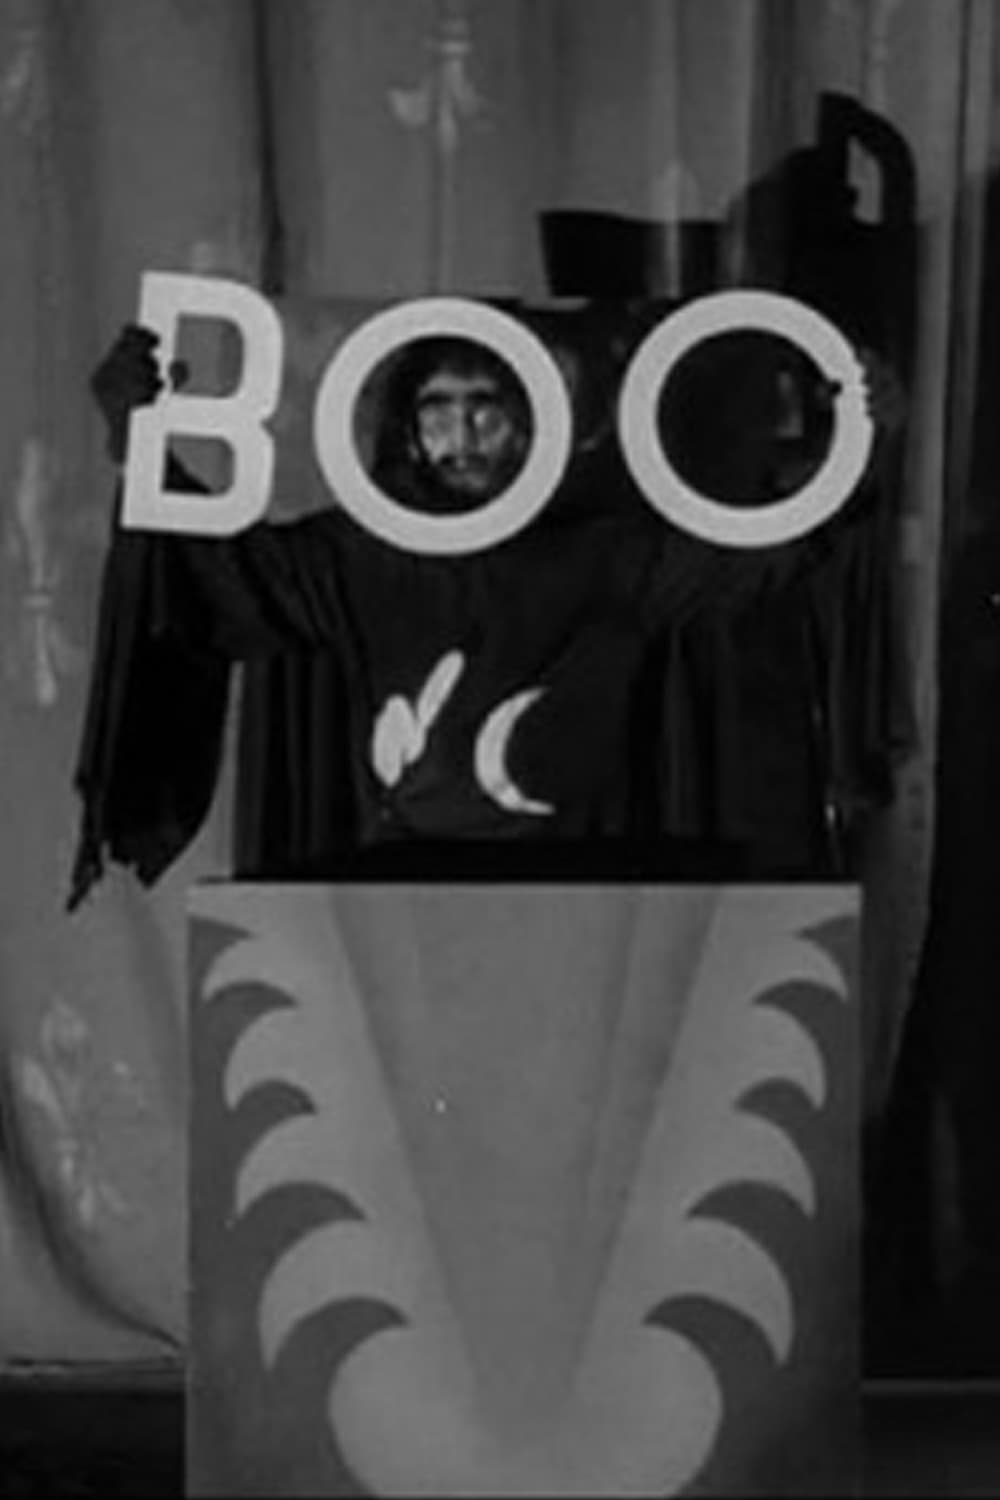 Boo (1932)